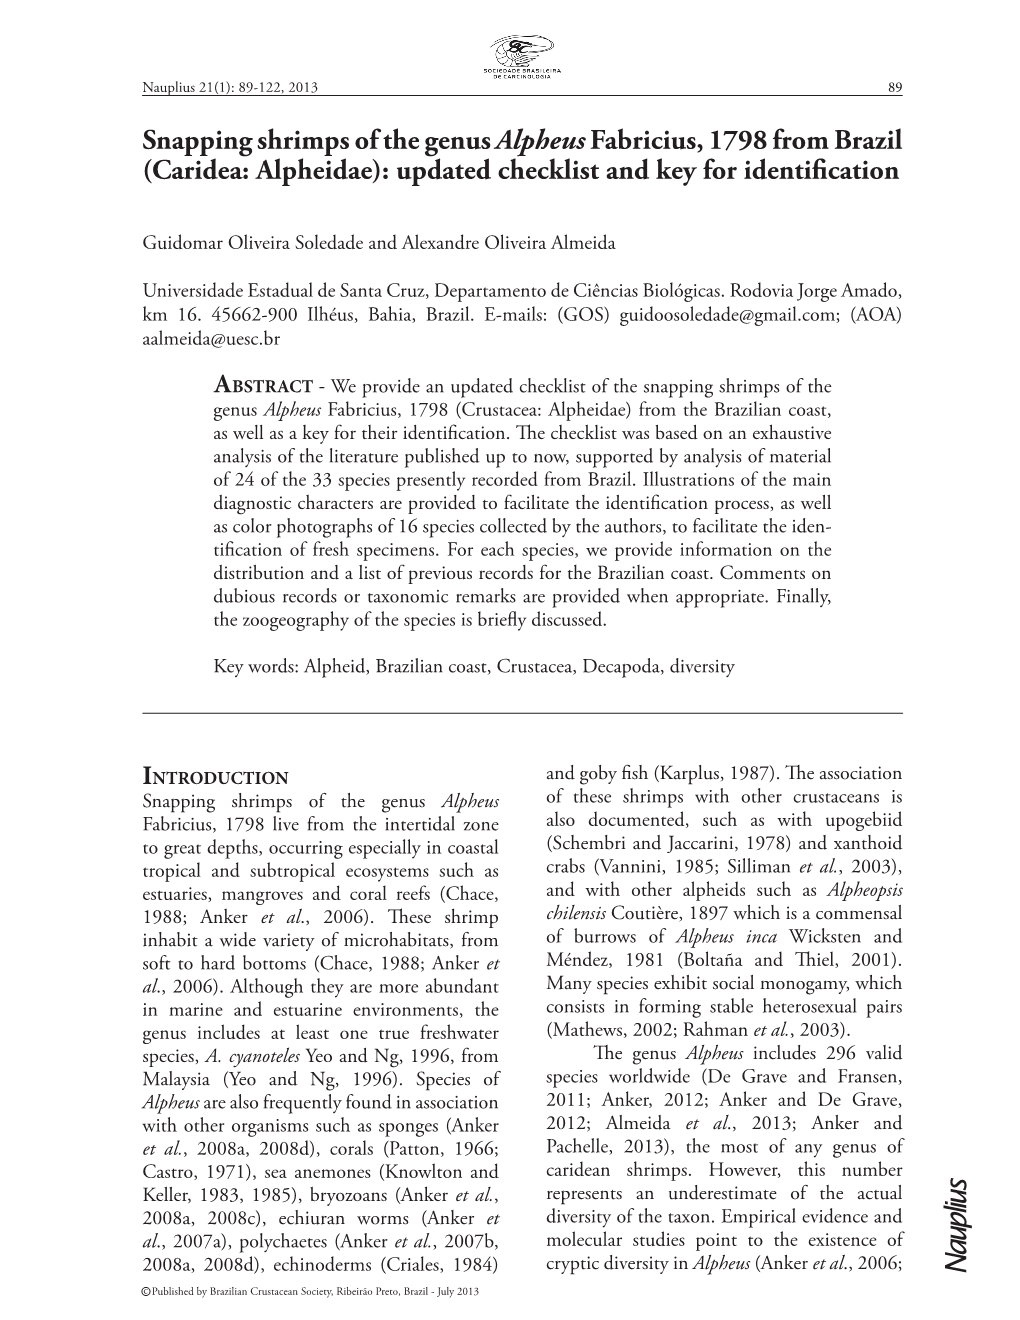 Caridea: Alpheidae): Updated Checklist and Key for Identification